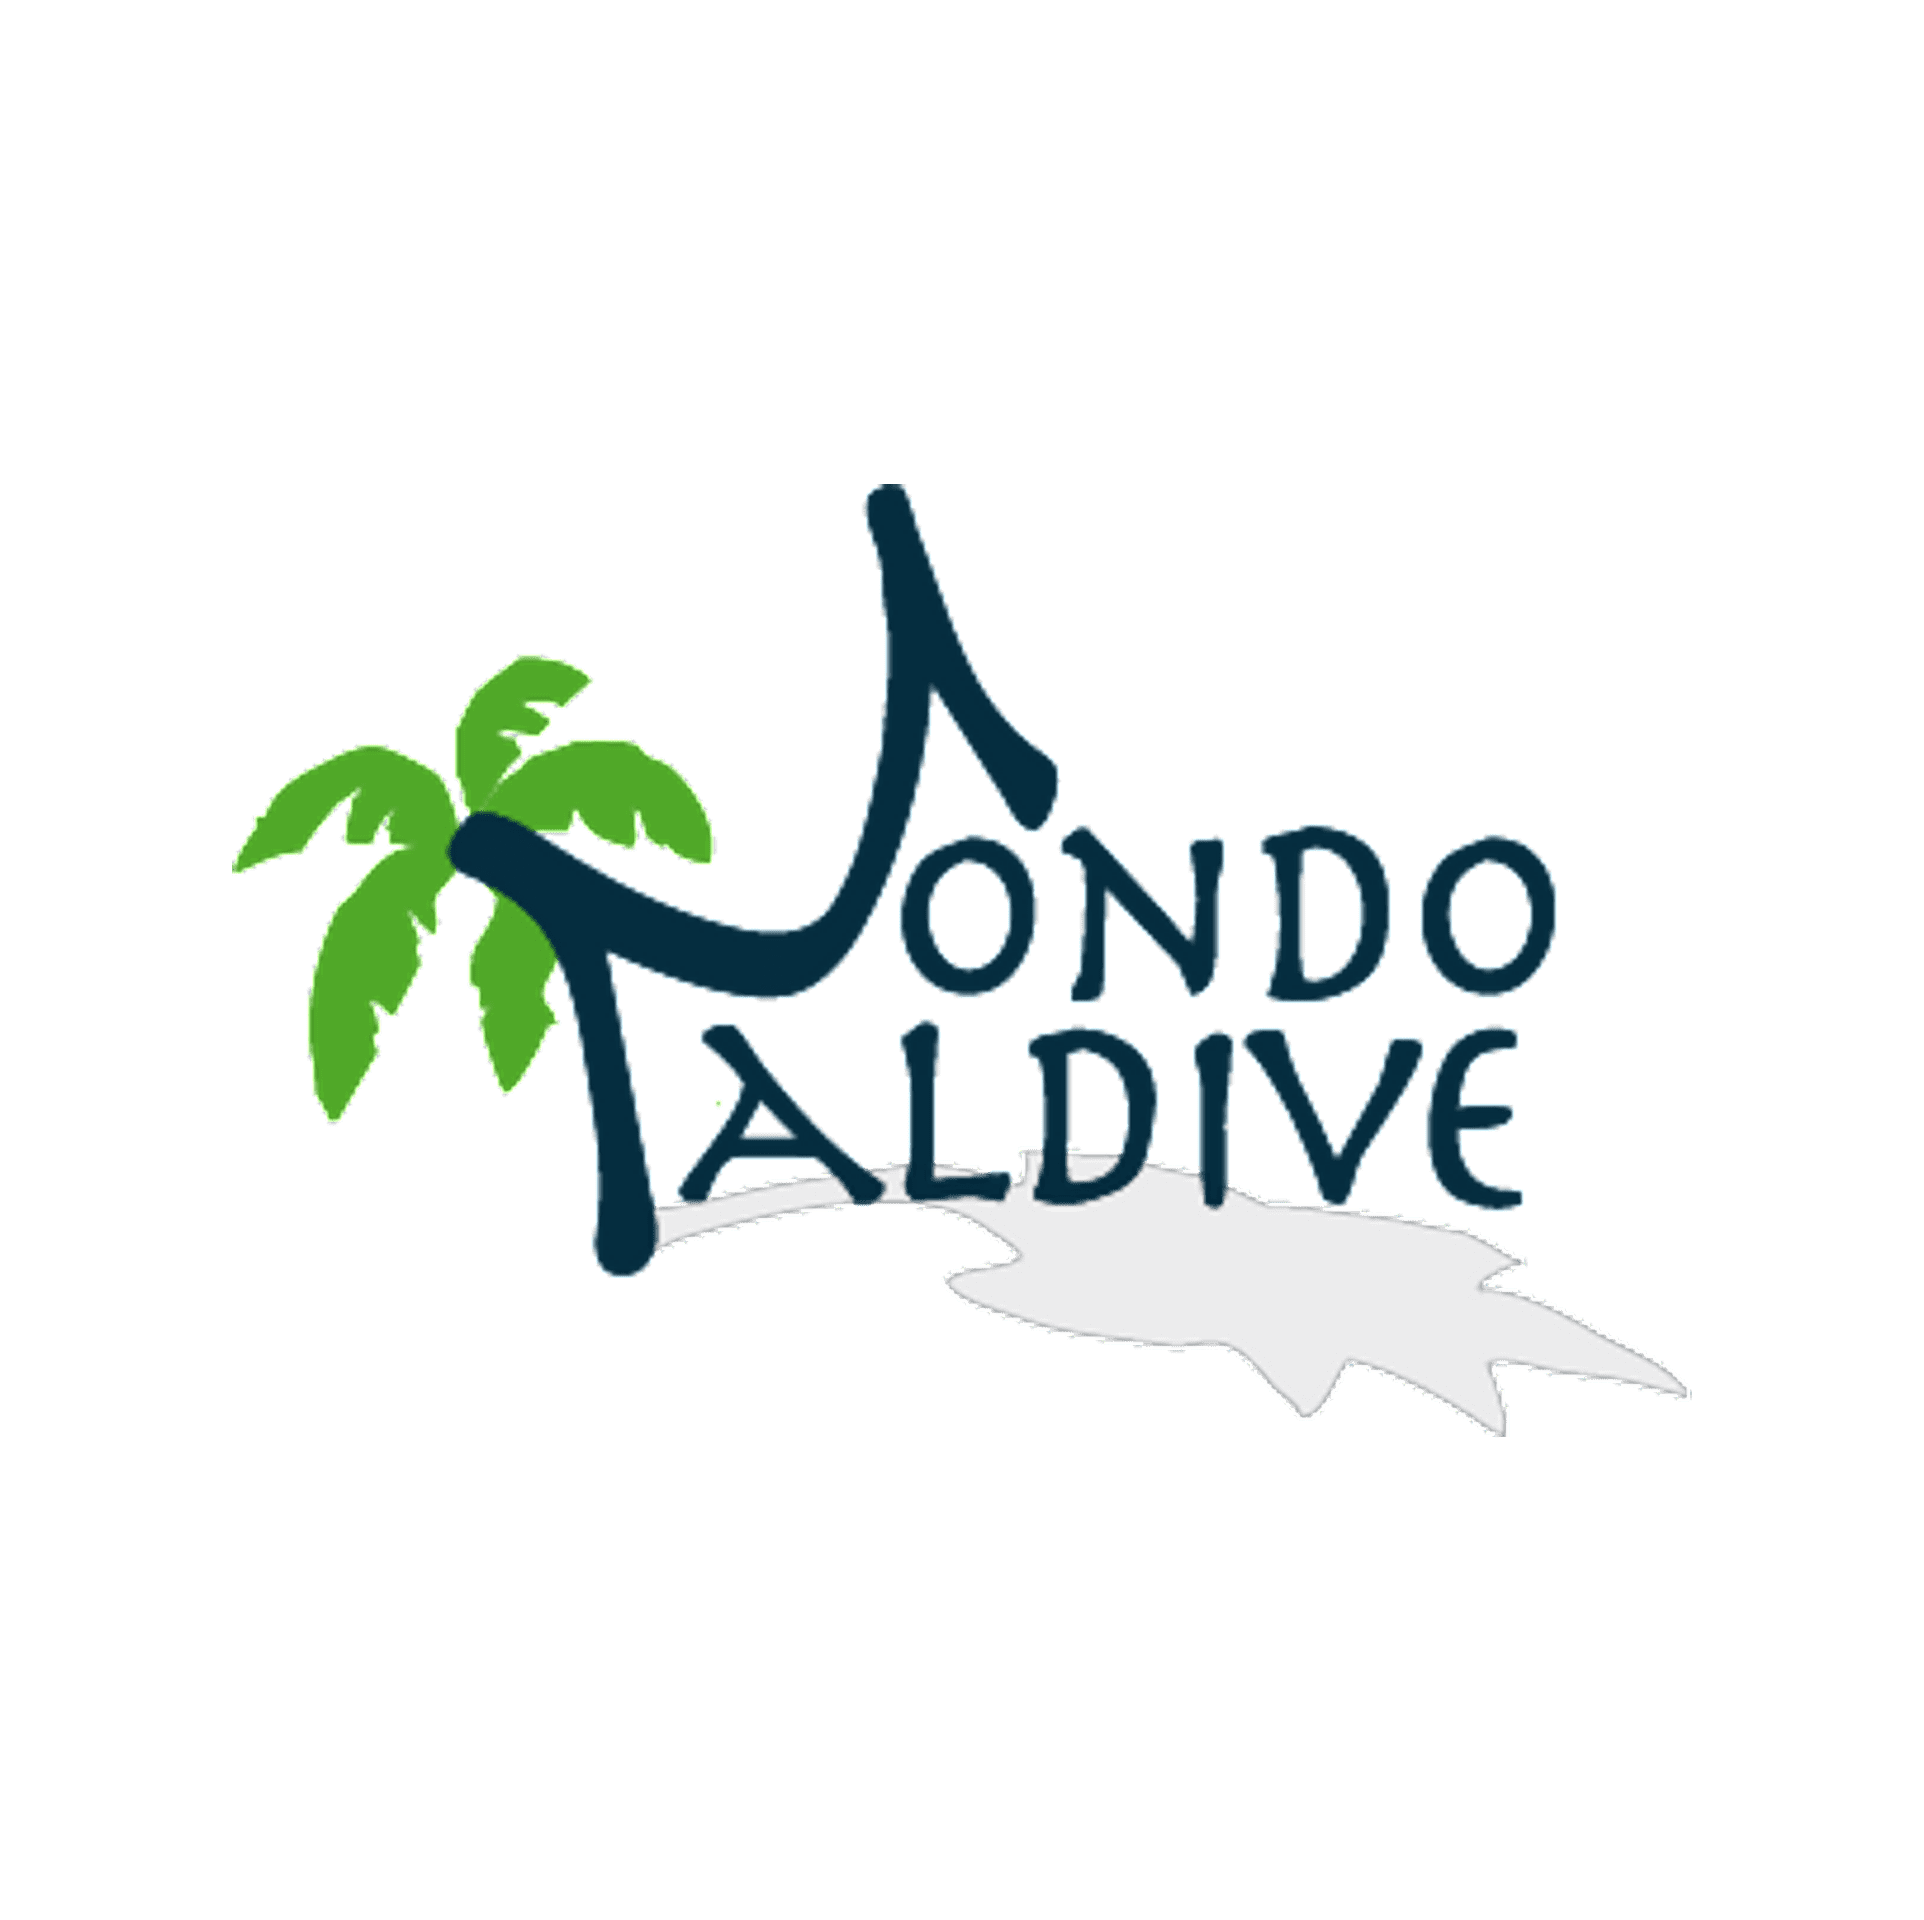 Sponsor tony arbolino,Mondo Maldive